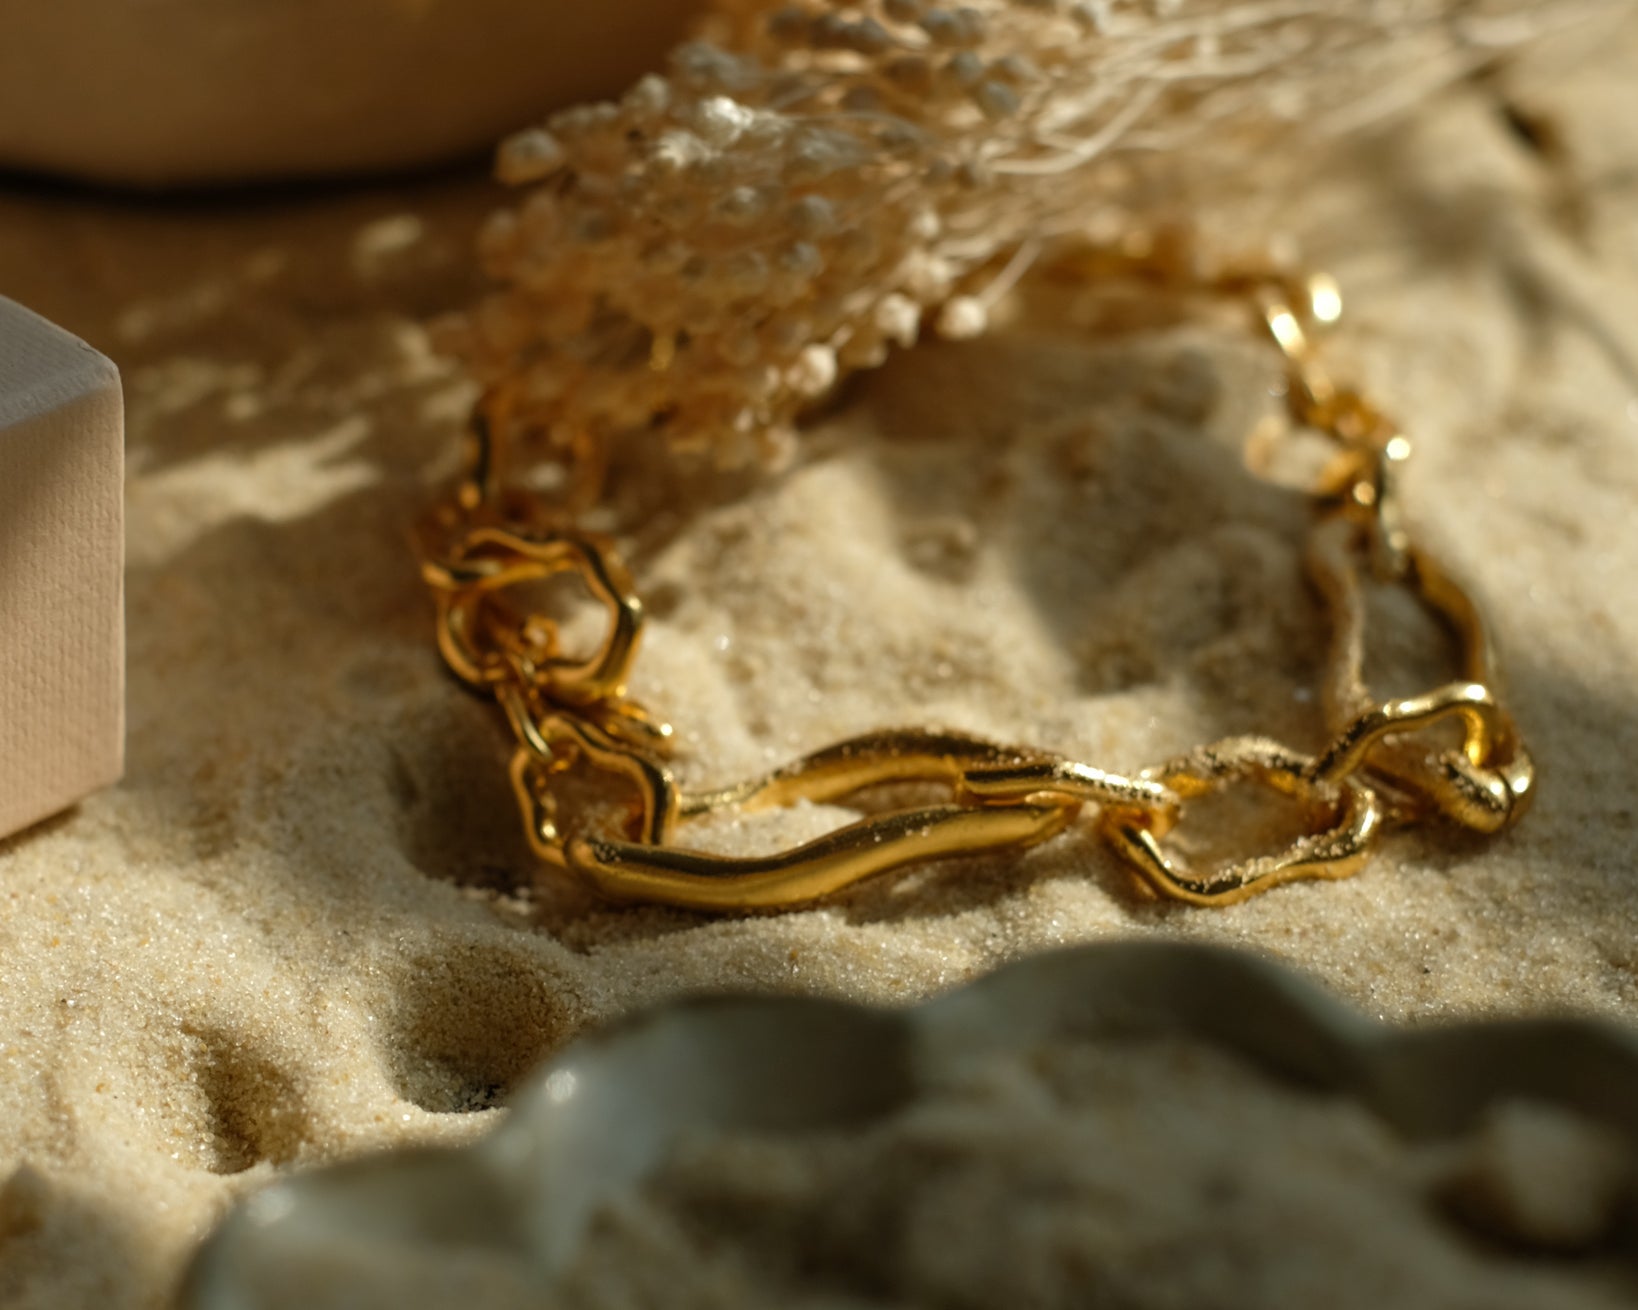 Etta Chain Bracelet | Sustainable Jewellery by Ottoman Hands